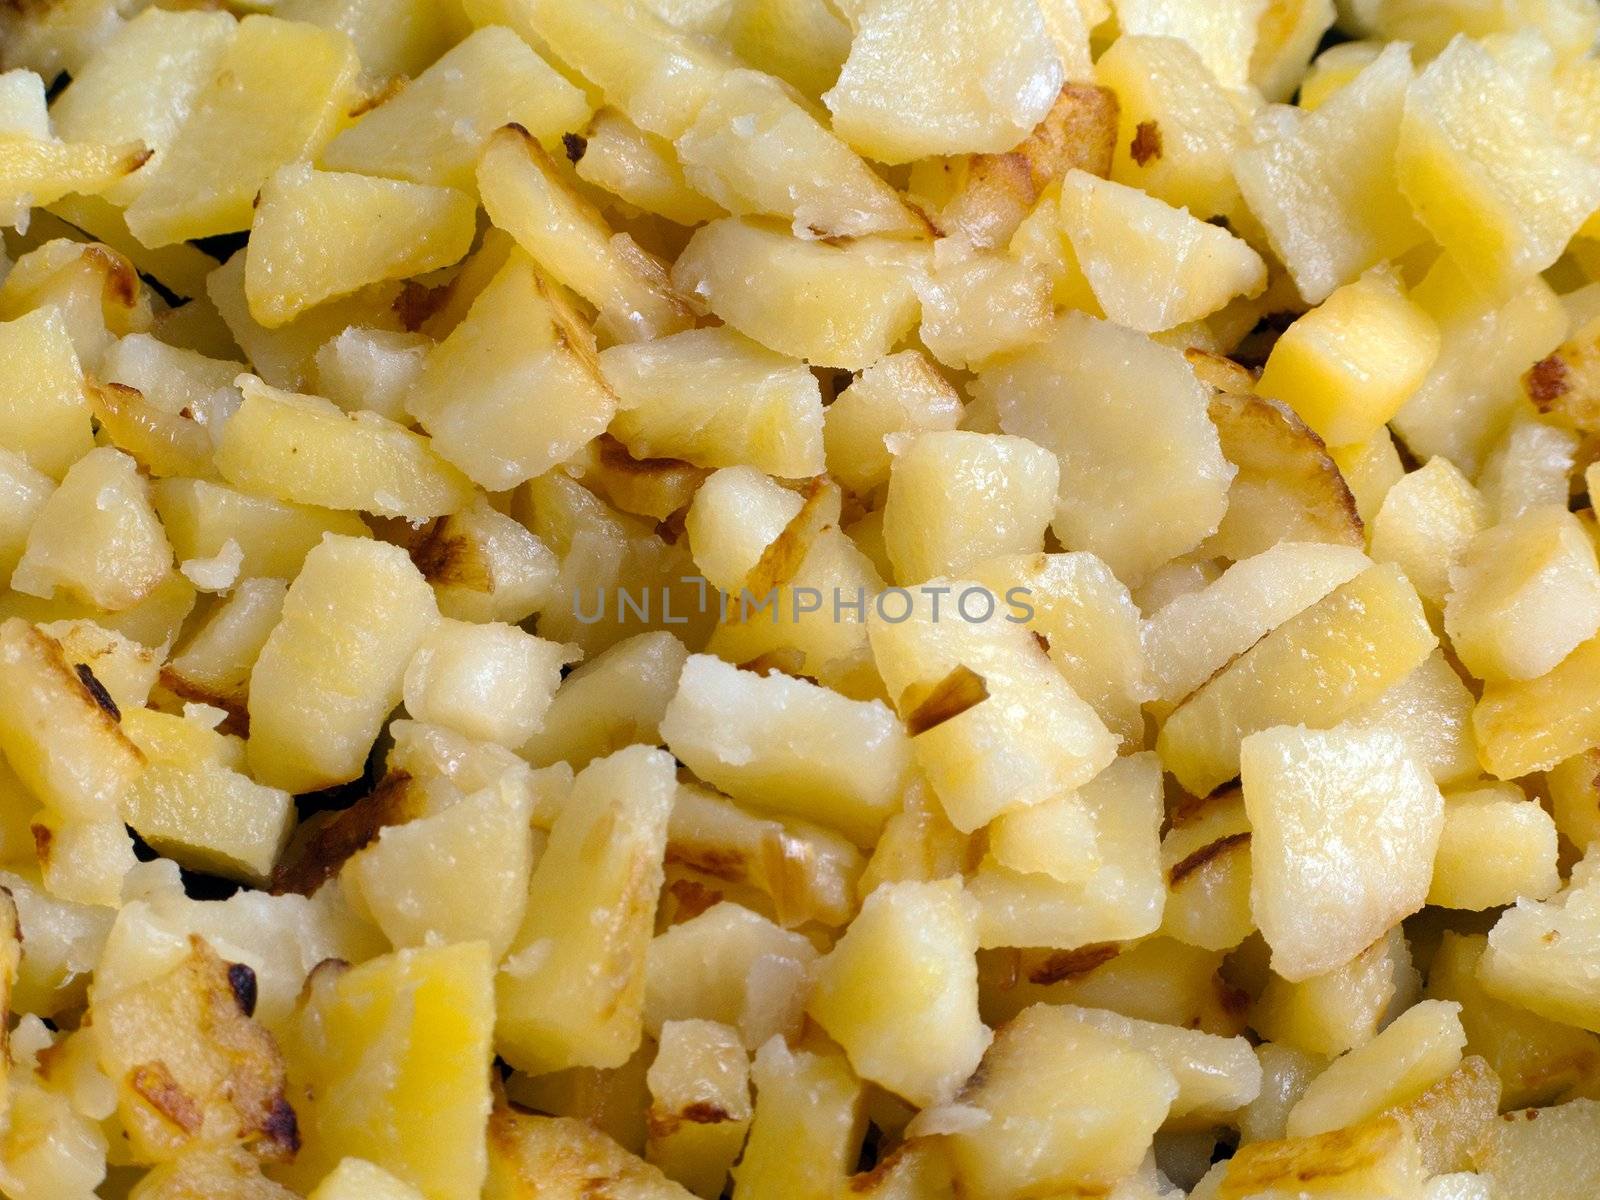 Fried potato food prepared for dinner meal eating